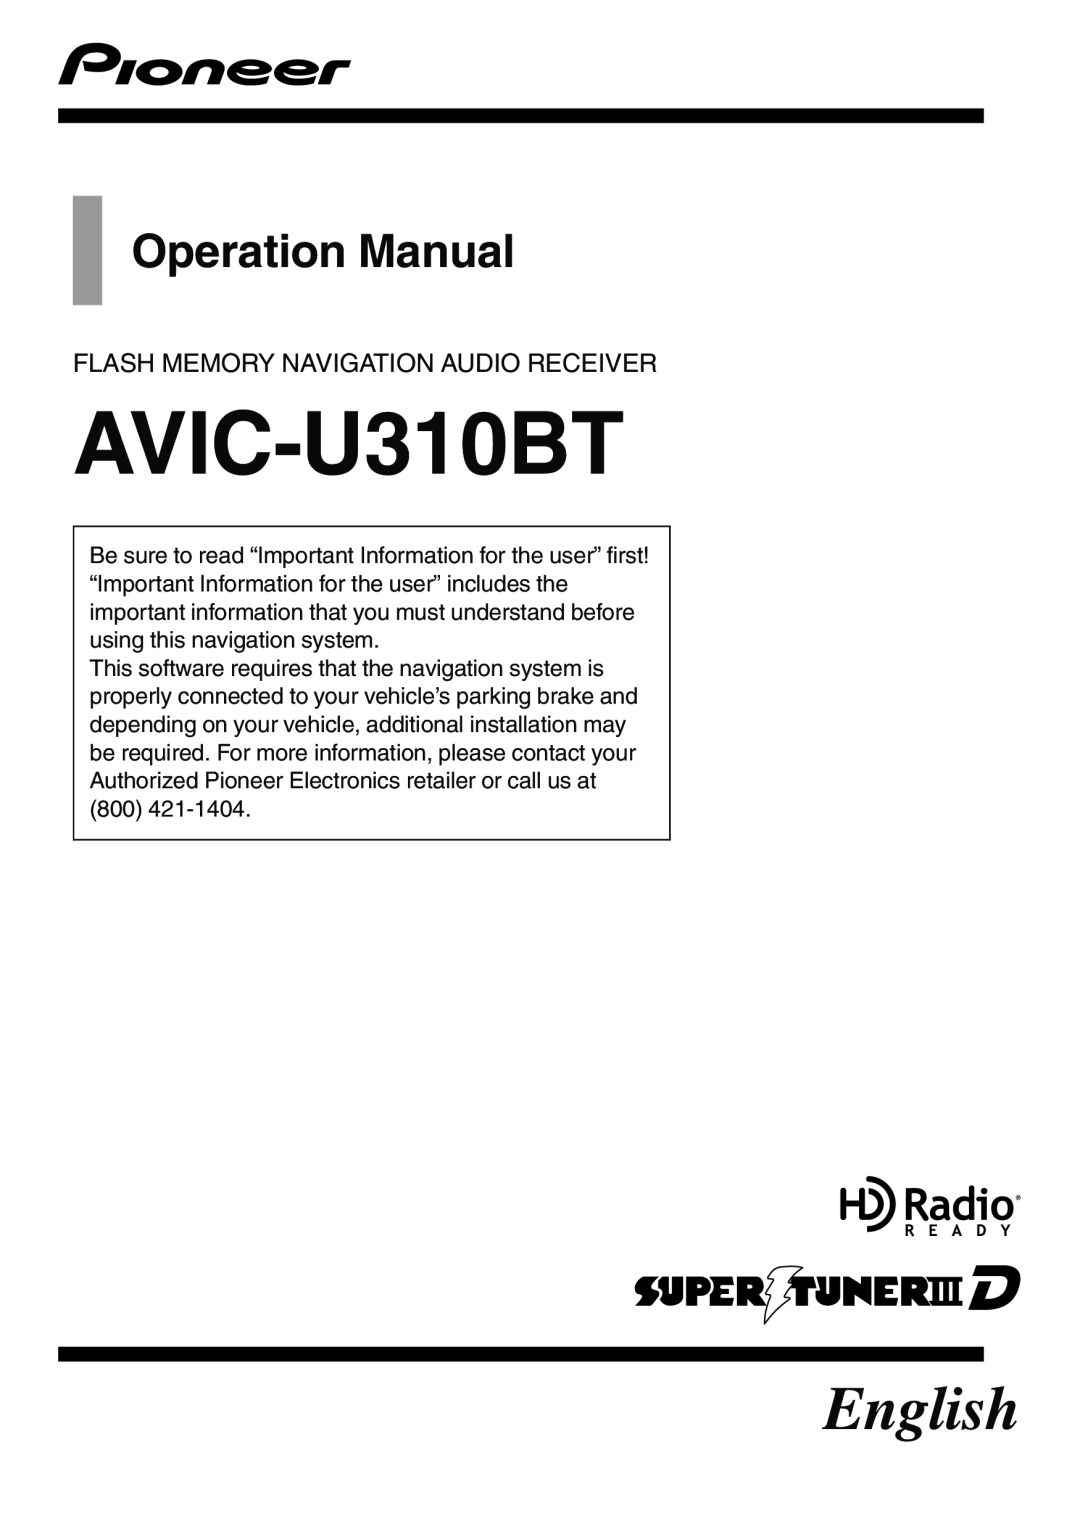 Pioneer AVIC-U310BT operation manual Flash Memory Navigation Audio Receiver, English, Operation Manual 